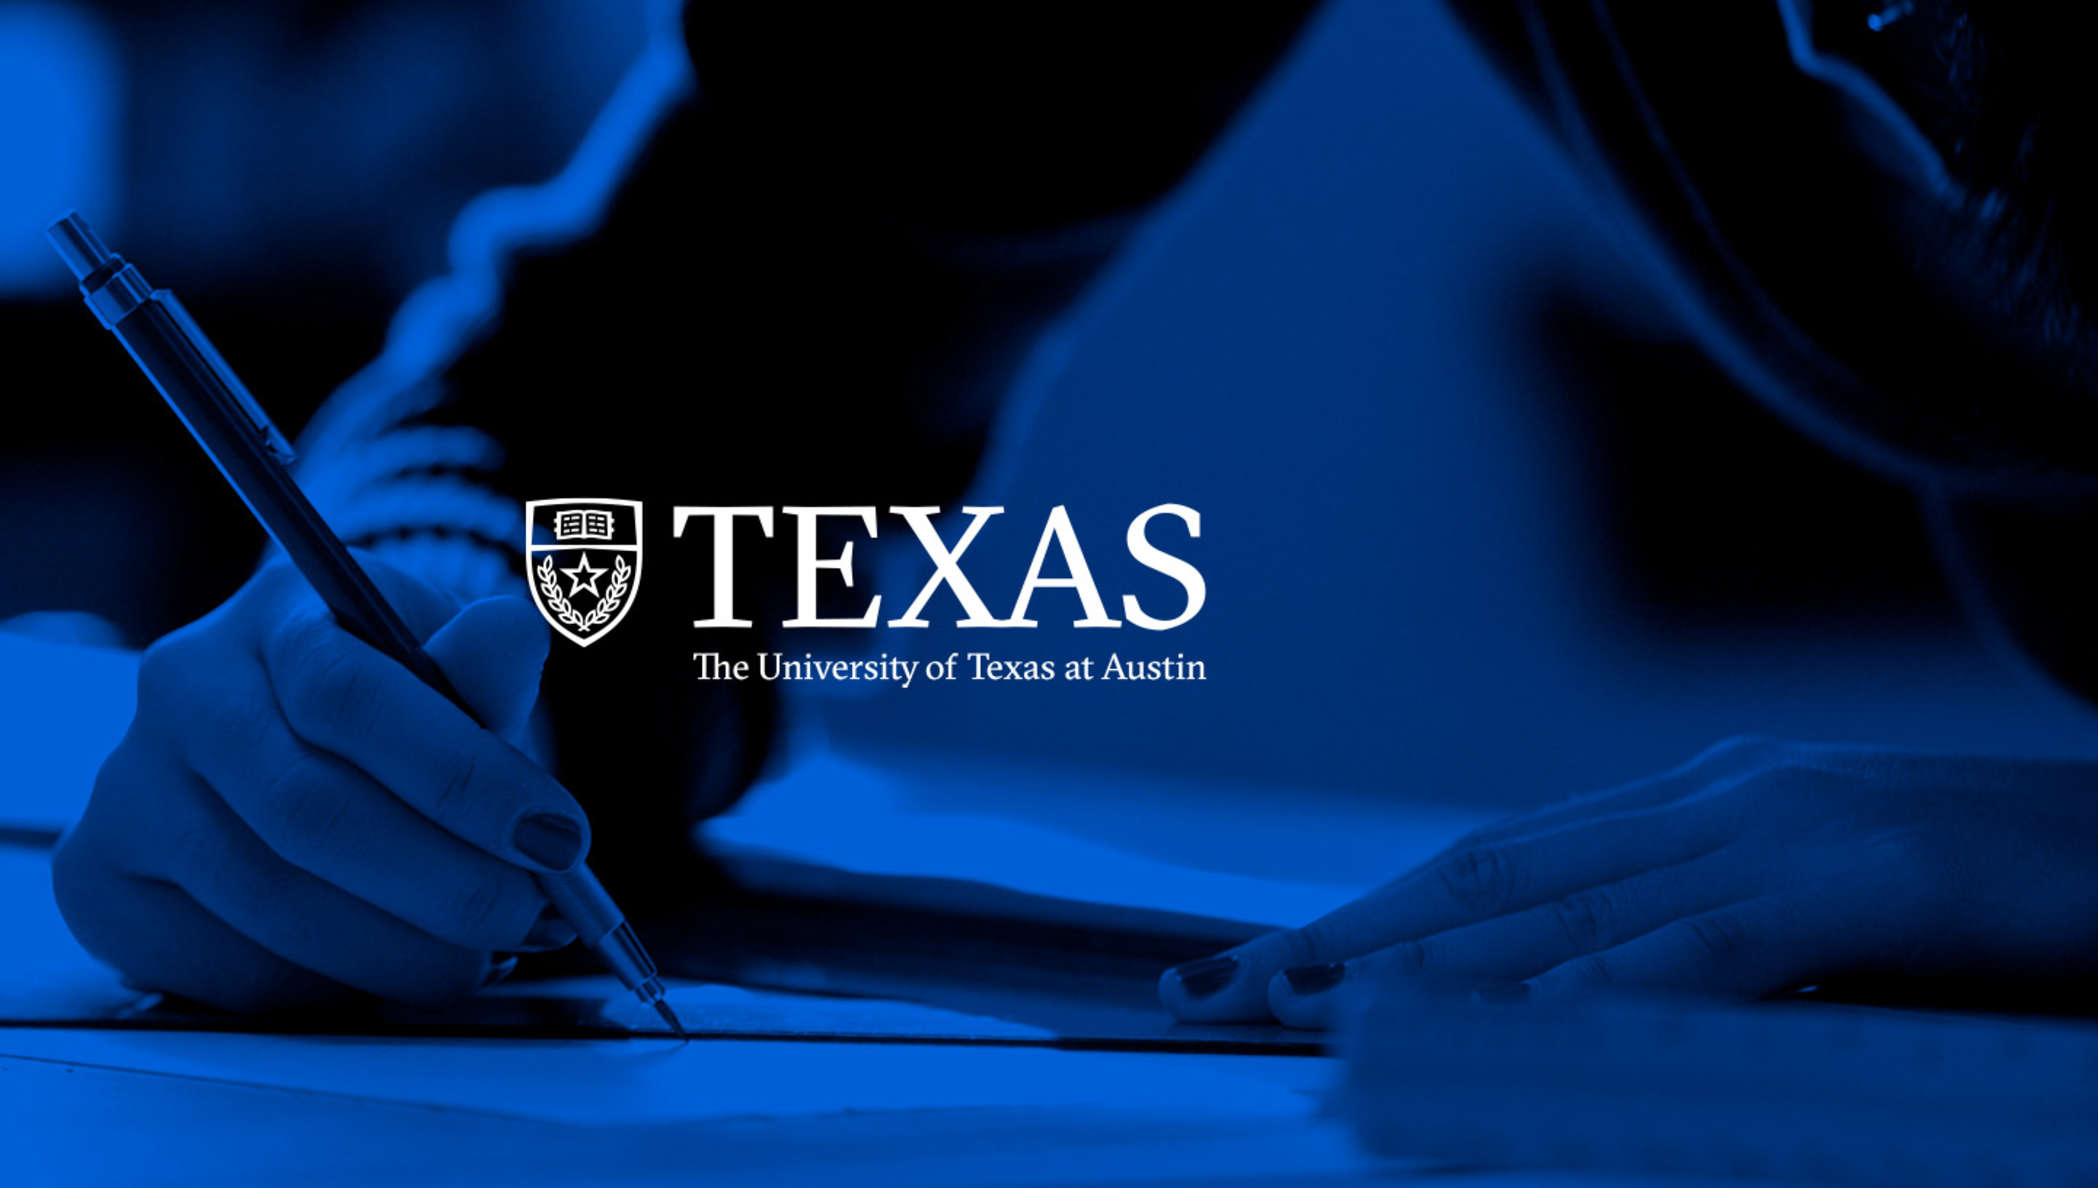 DocuSign customer, The University of Texas at Austin’s logo.